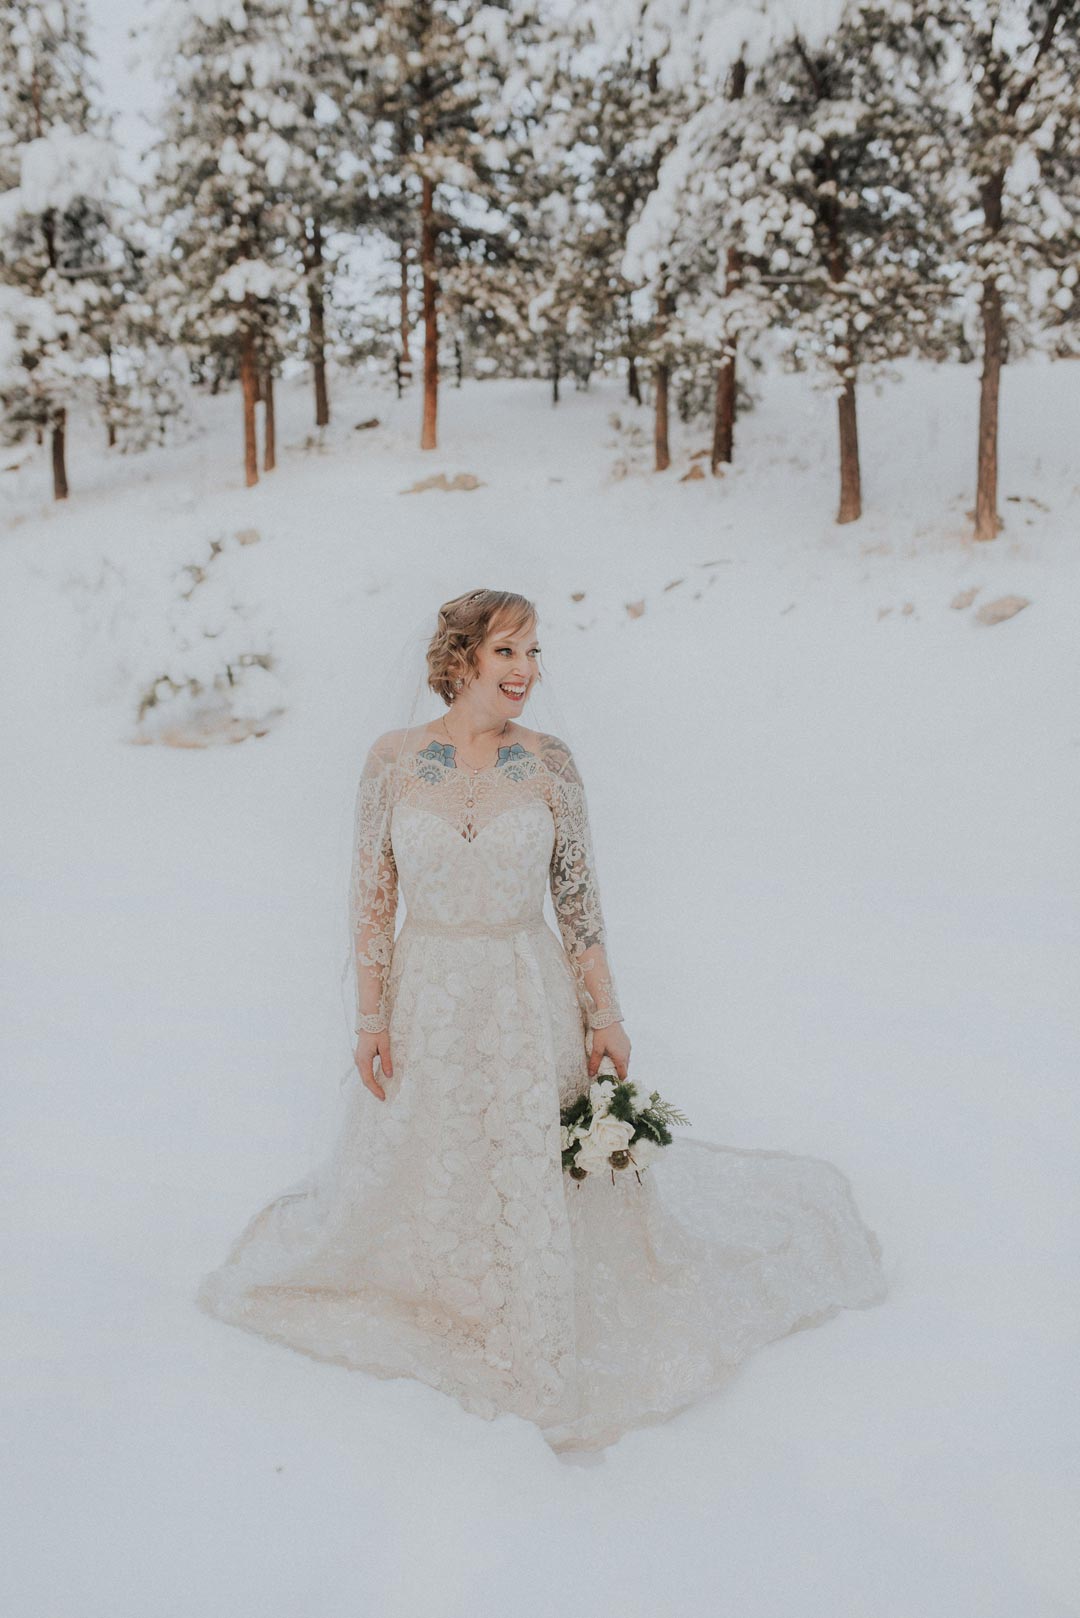 Bride in photo wear Vagabond Couture wedding dress designed by Claire Pettibone